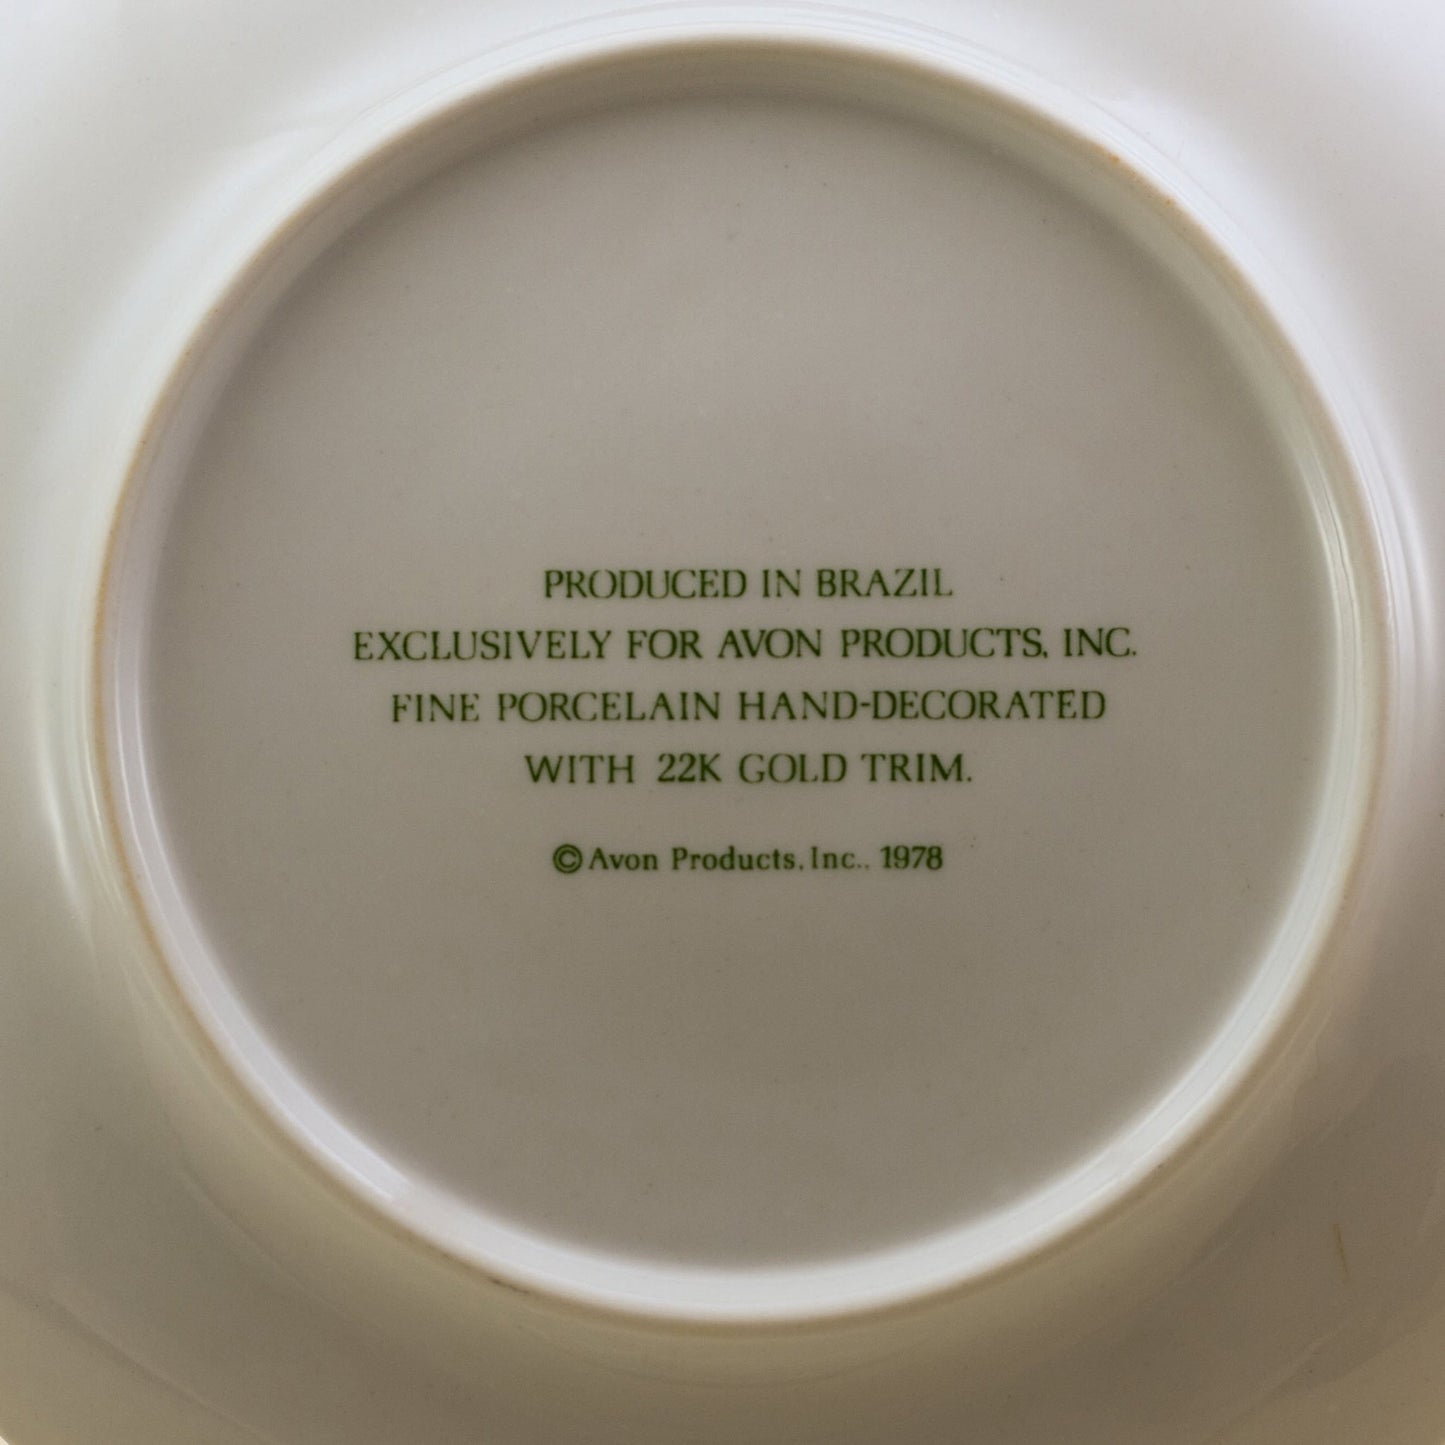 STRAWBERRY PORCELAIN DESSERT PLATE by Avon Made in Brazil